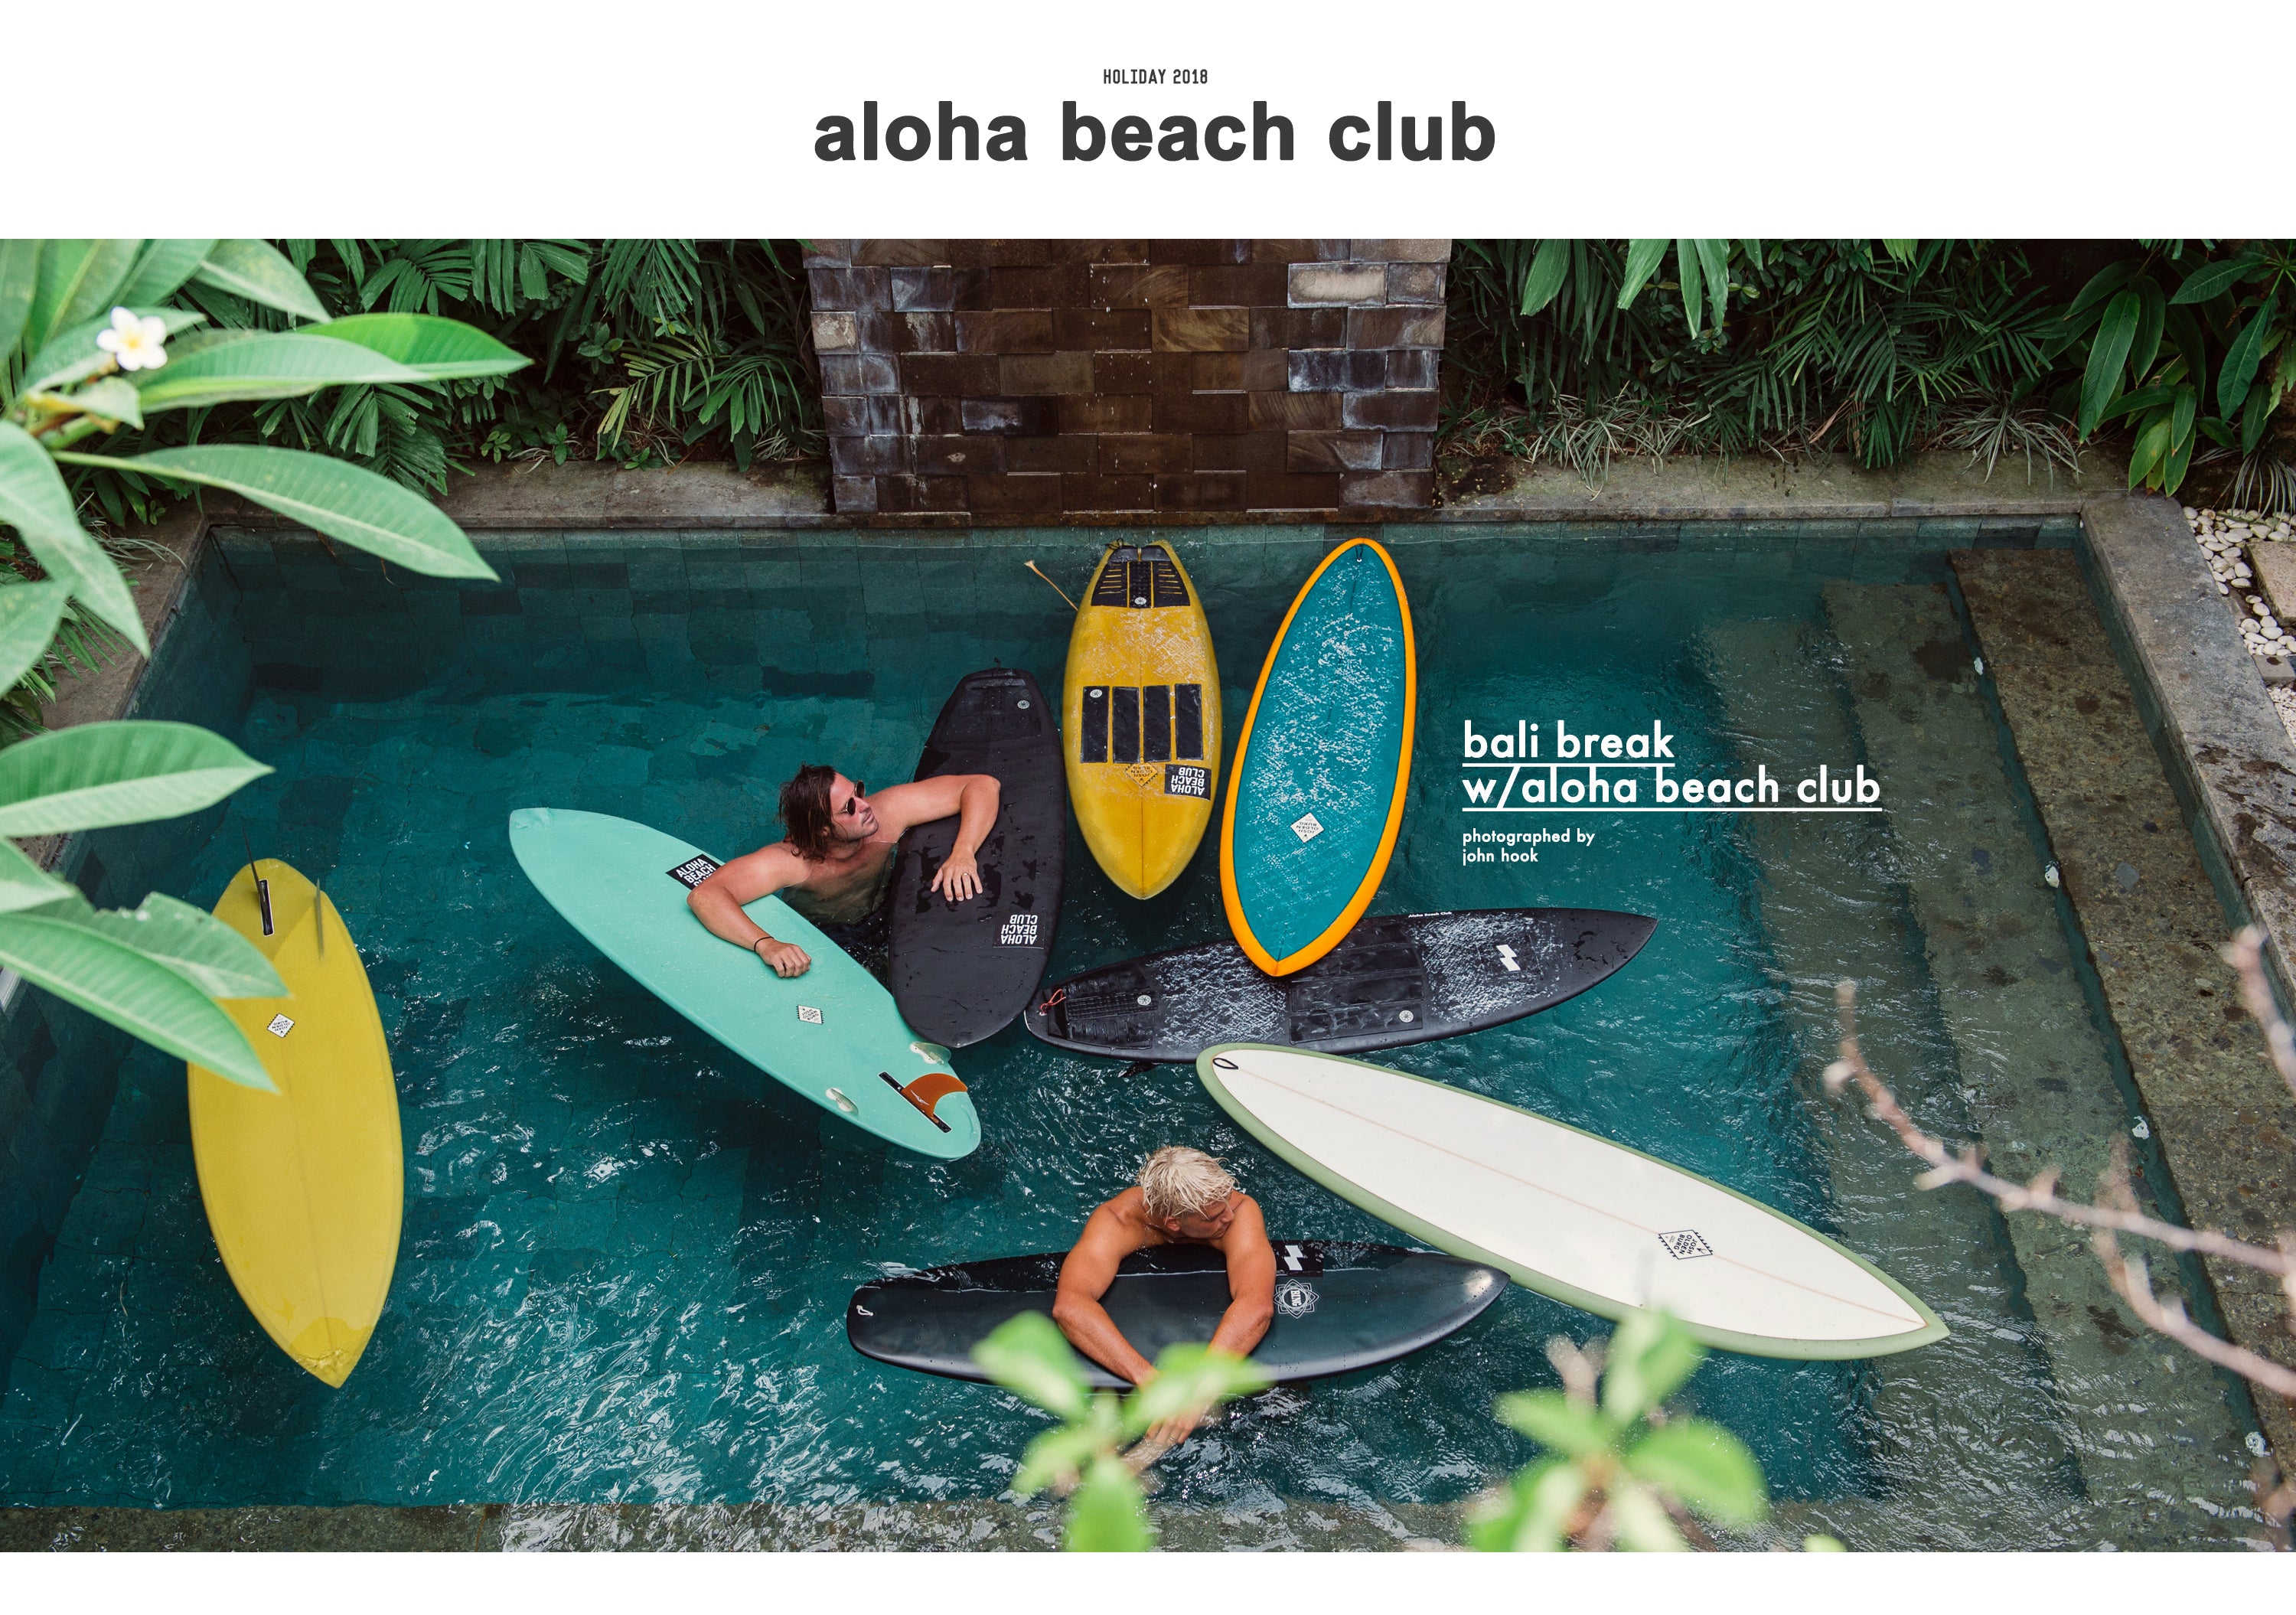 Aloha Beach Club Holiday 2018